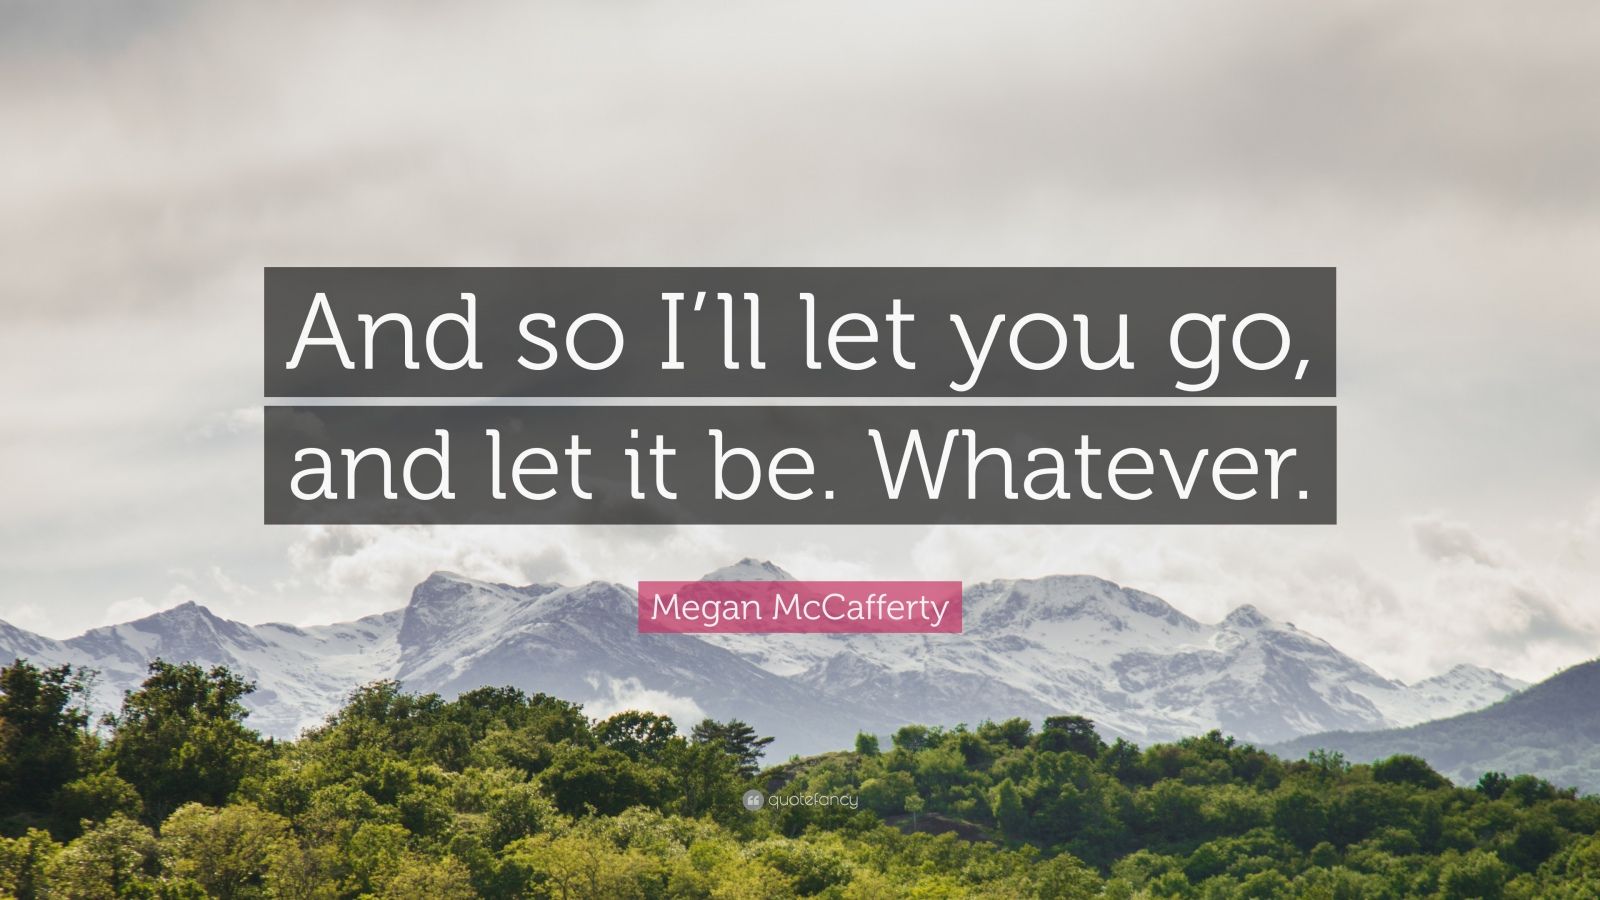 Megan McCafferty Quotes (64 wallpapers) - Quotefancy